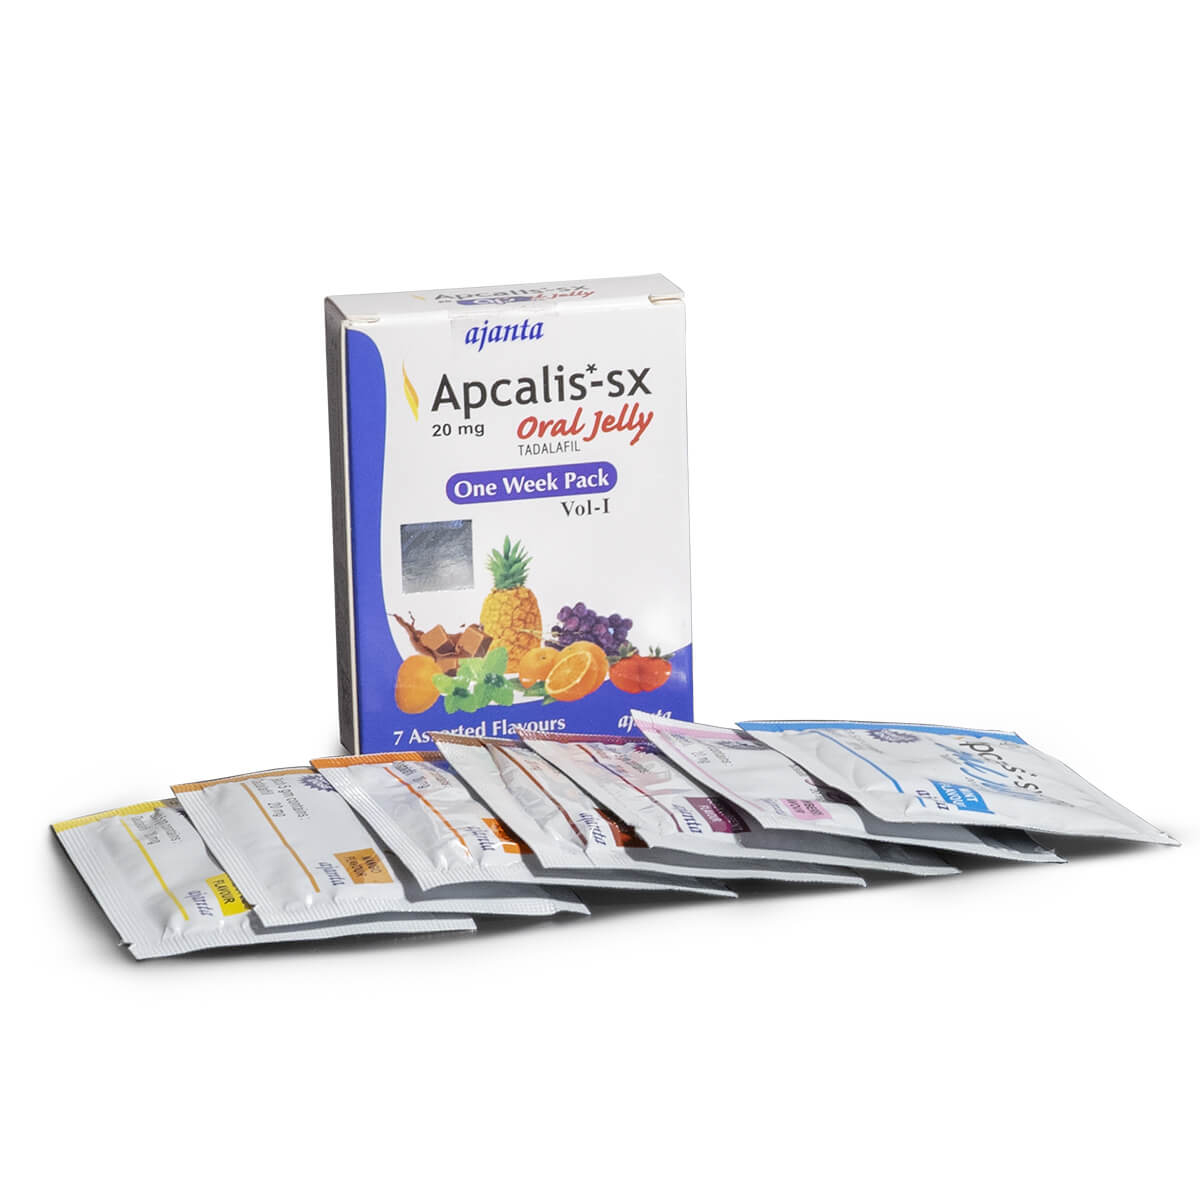 Apcalis-sx oral jelly 20mg